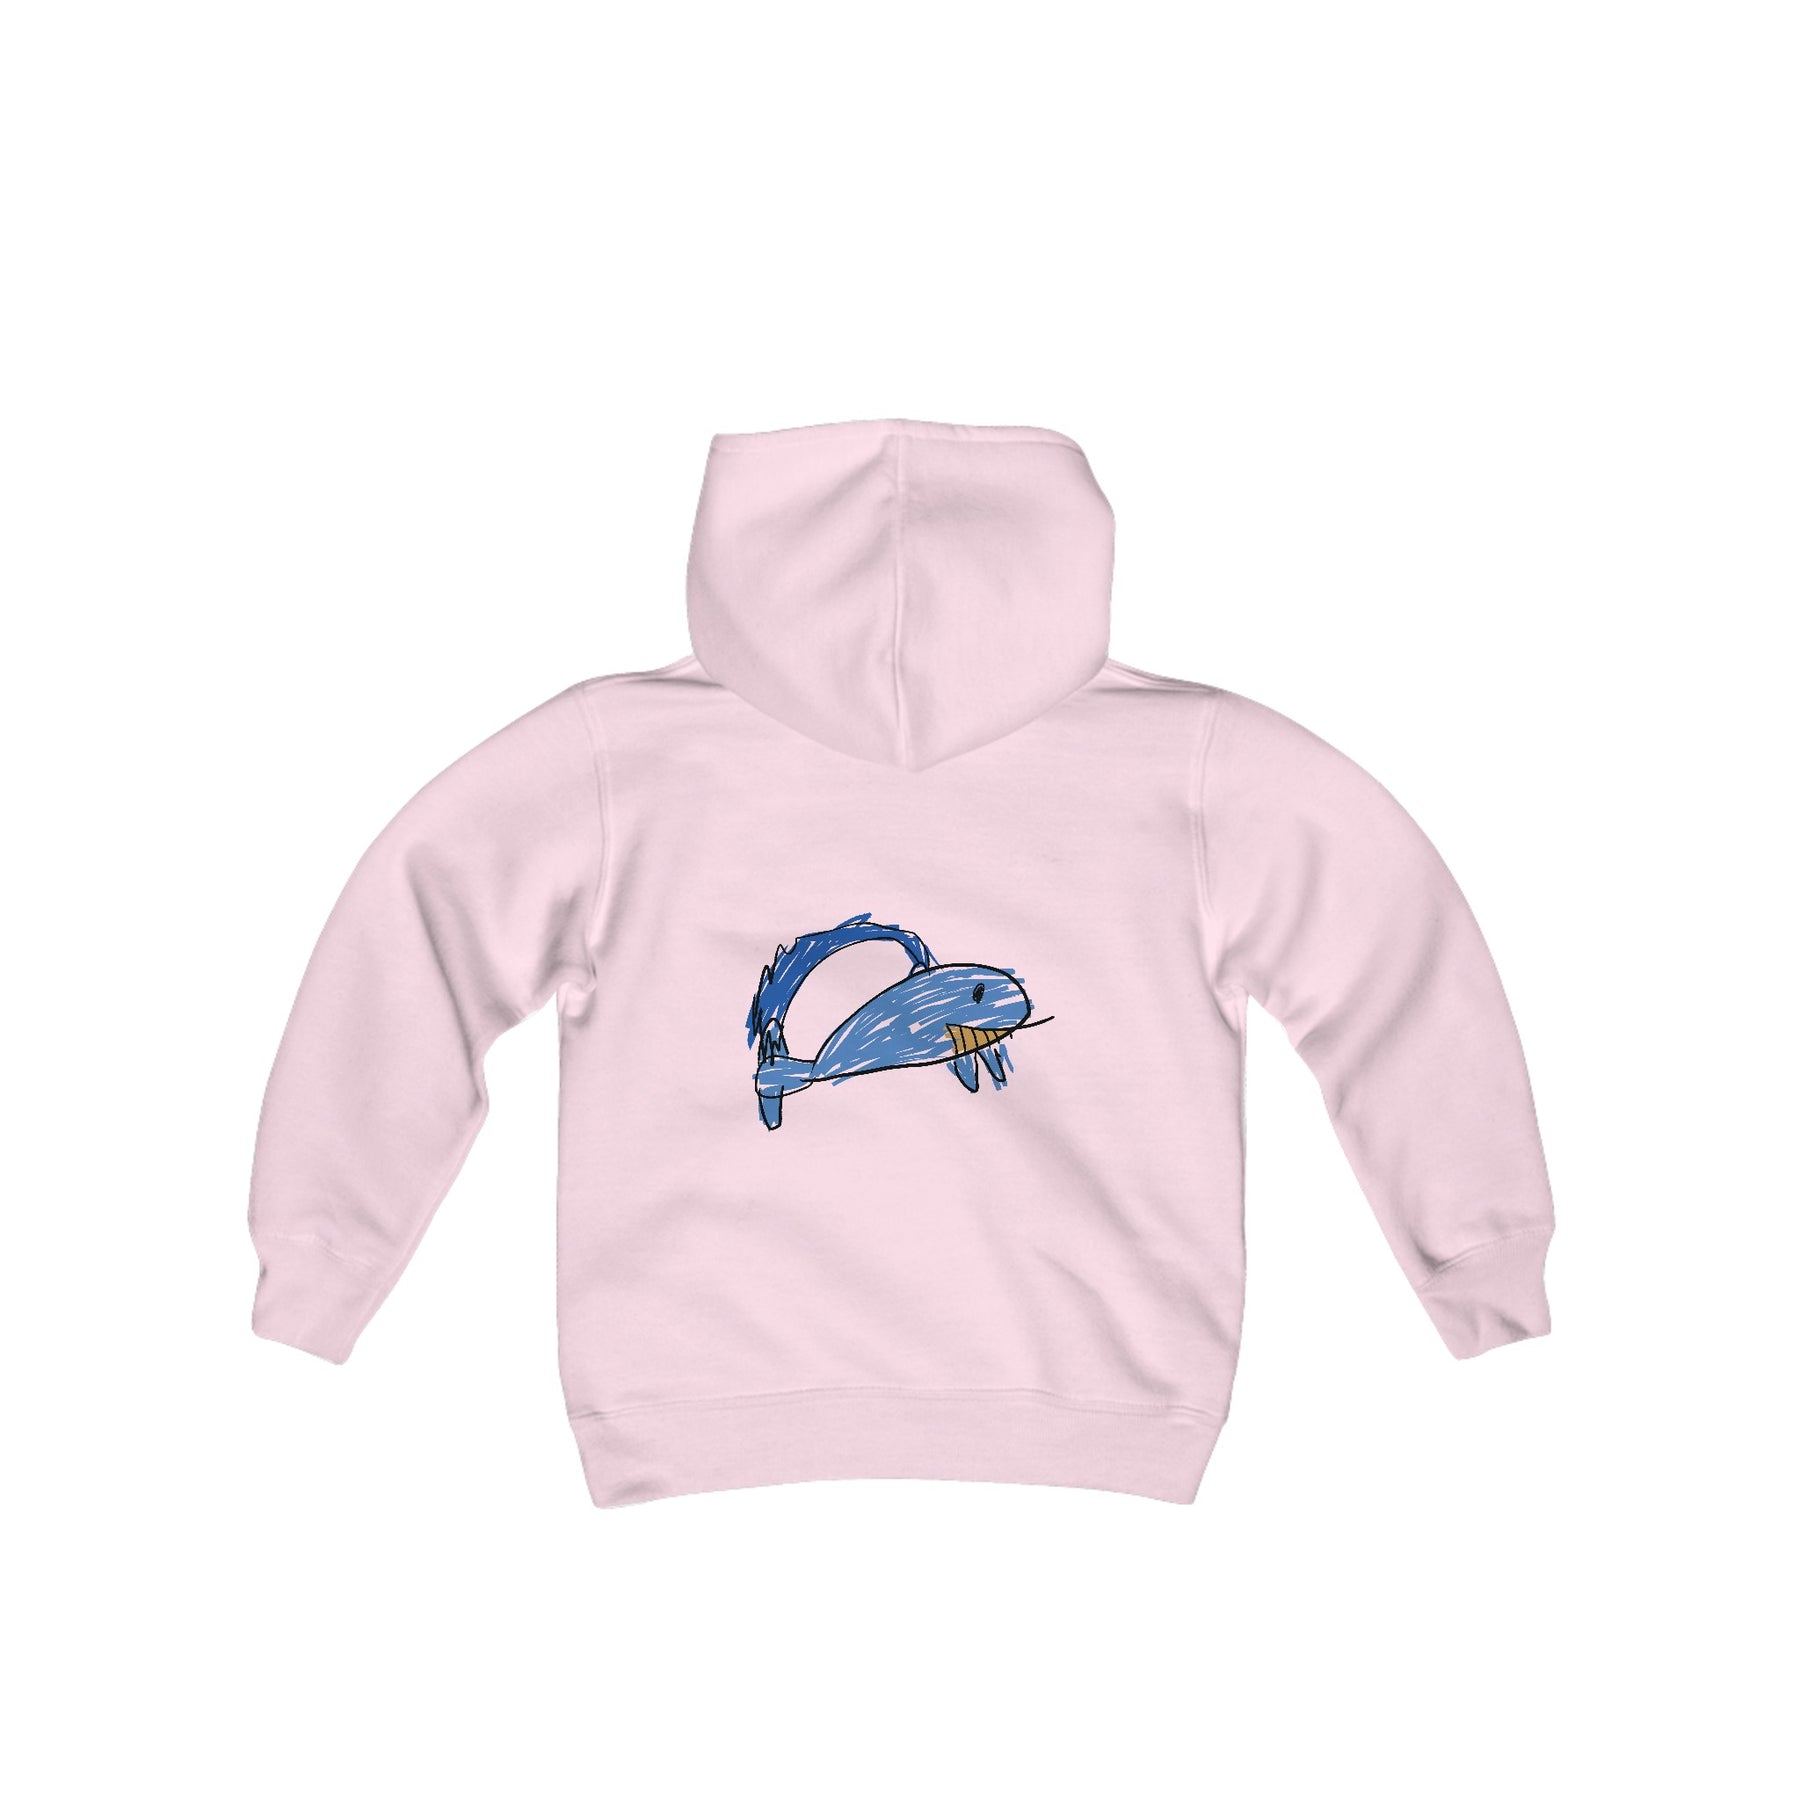 Youth Whale Sweatshirt